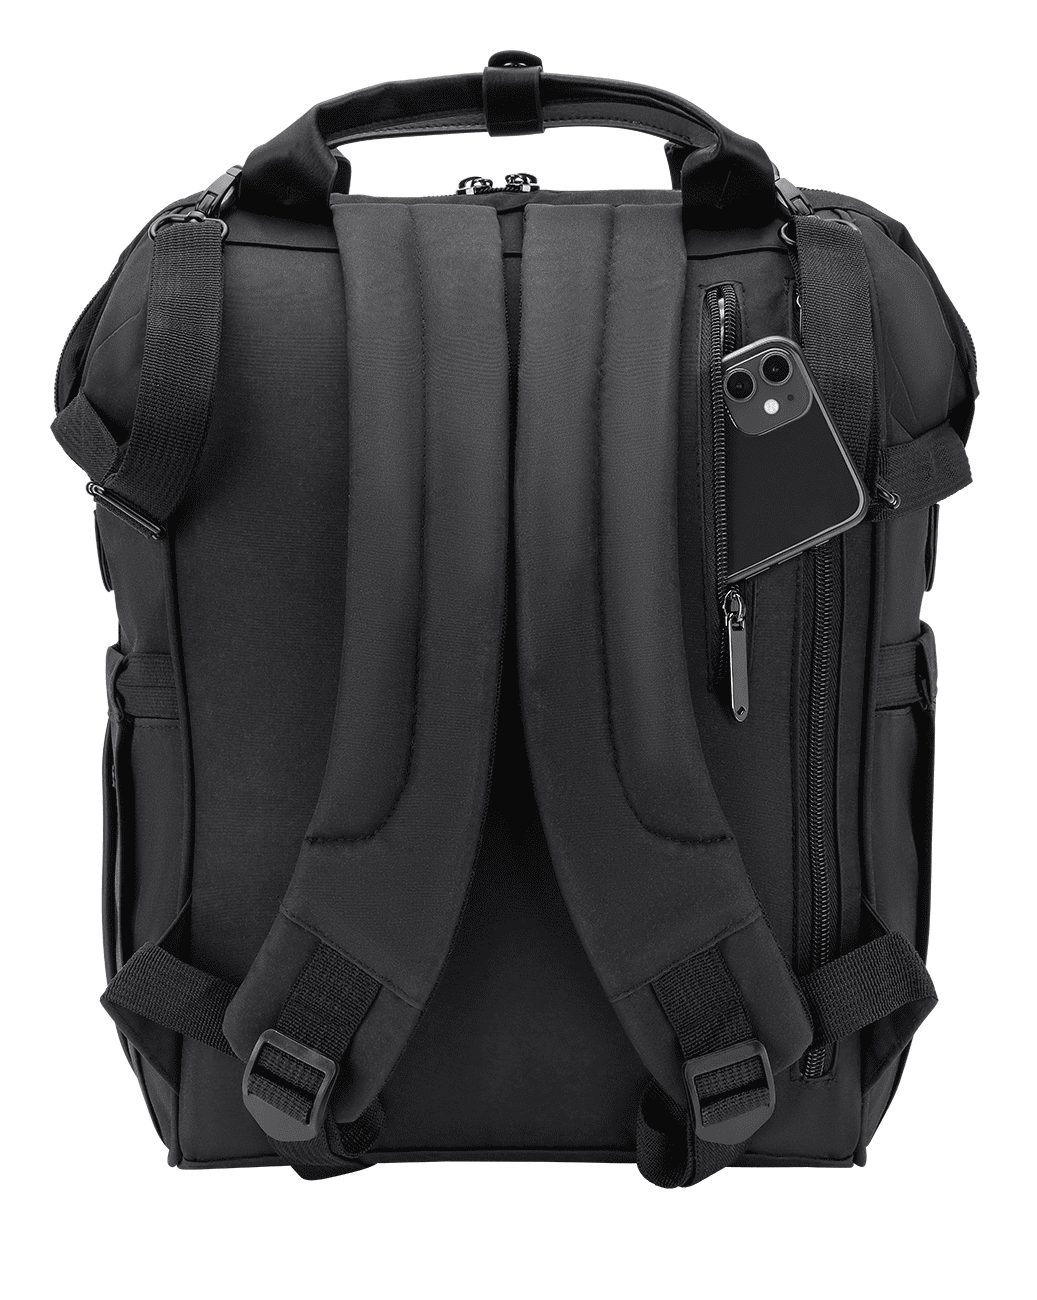 Backpack, Black Handyport Wickelrucksack Osann mit Wickeltasche Wickelrucksack